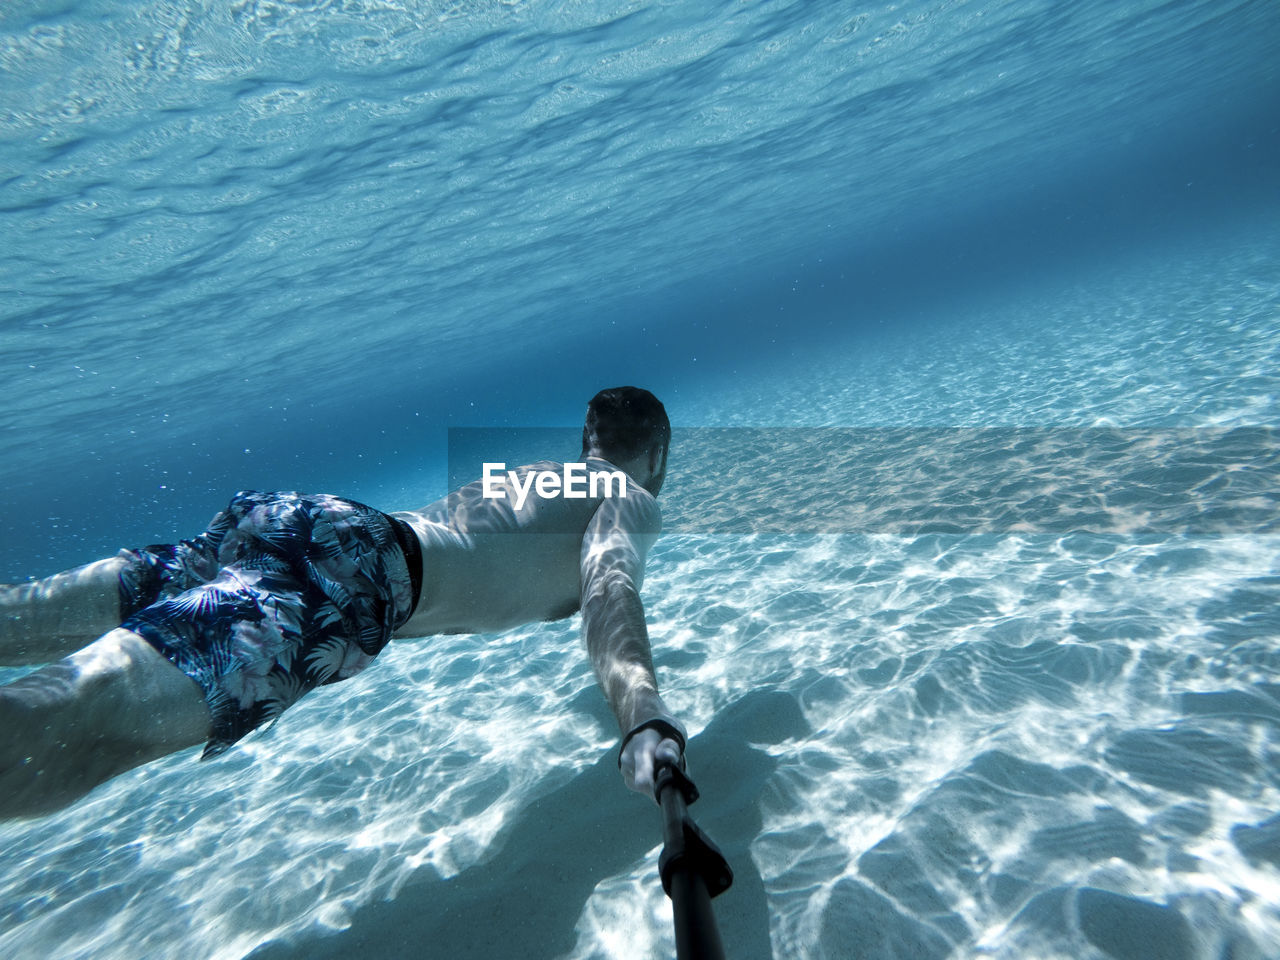 Go pro selfie of man swimming underwater